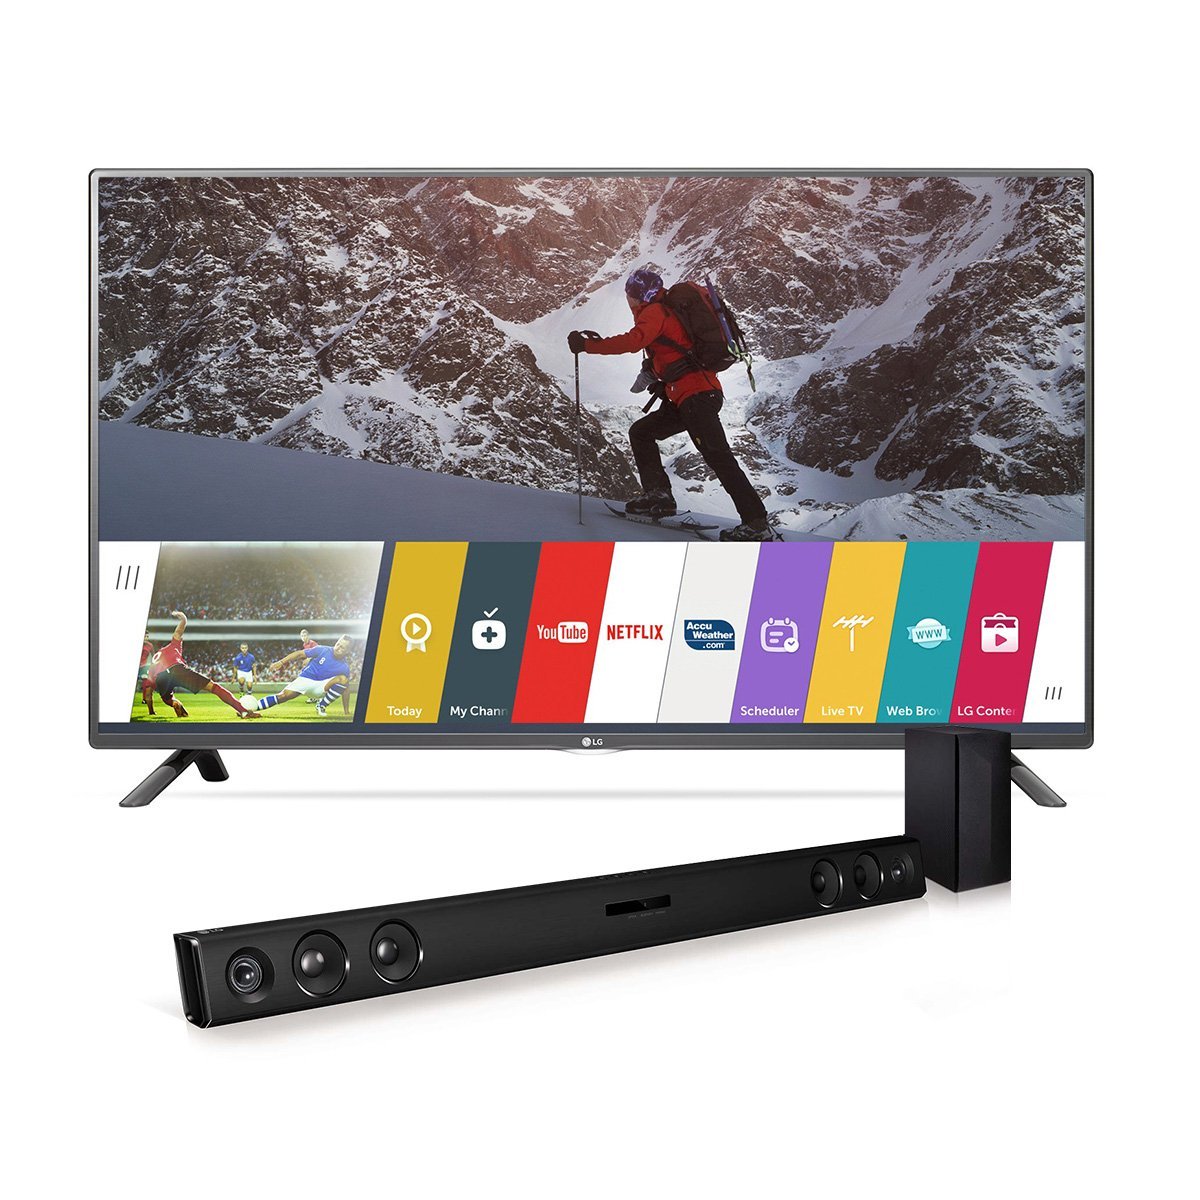  LG Electronics  43-Inch Smart LED TV with  Soundbar